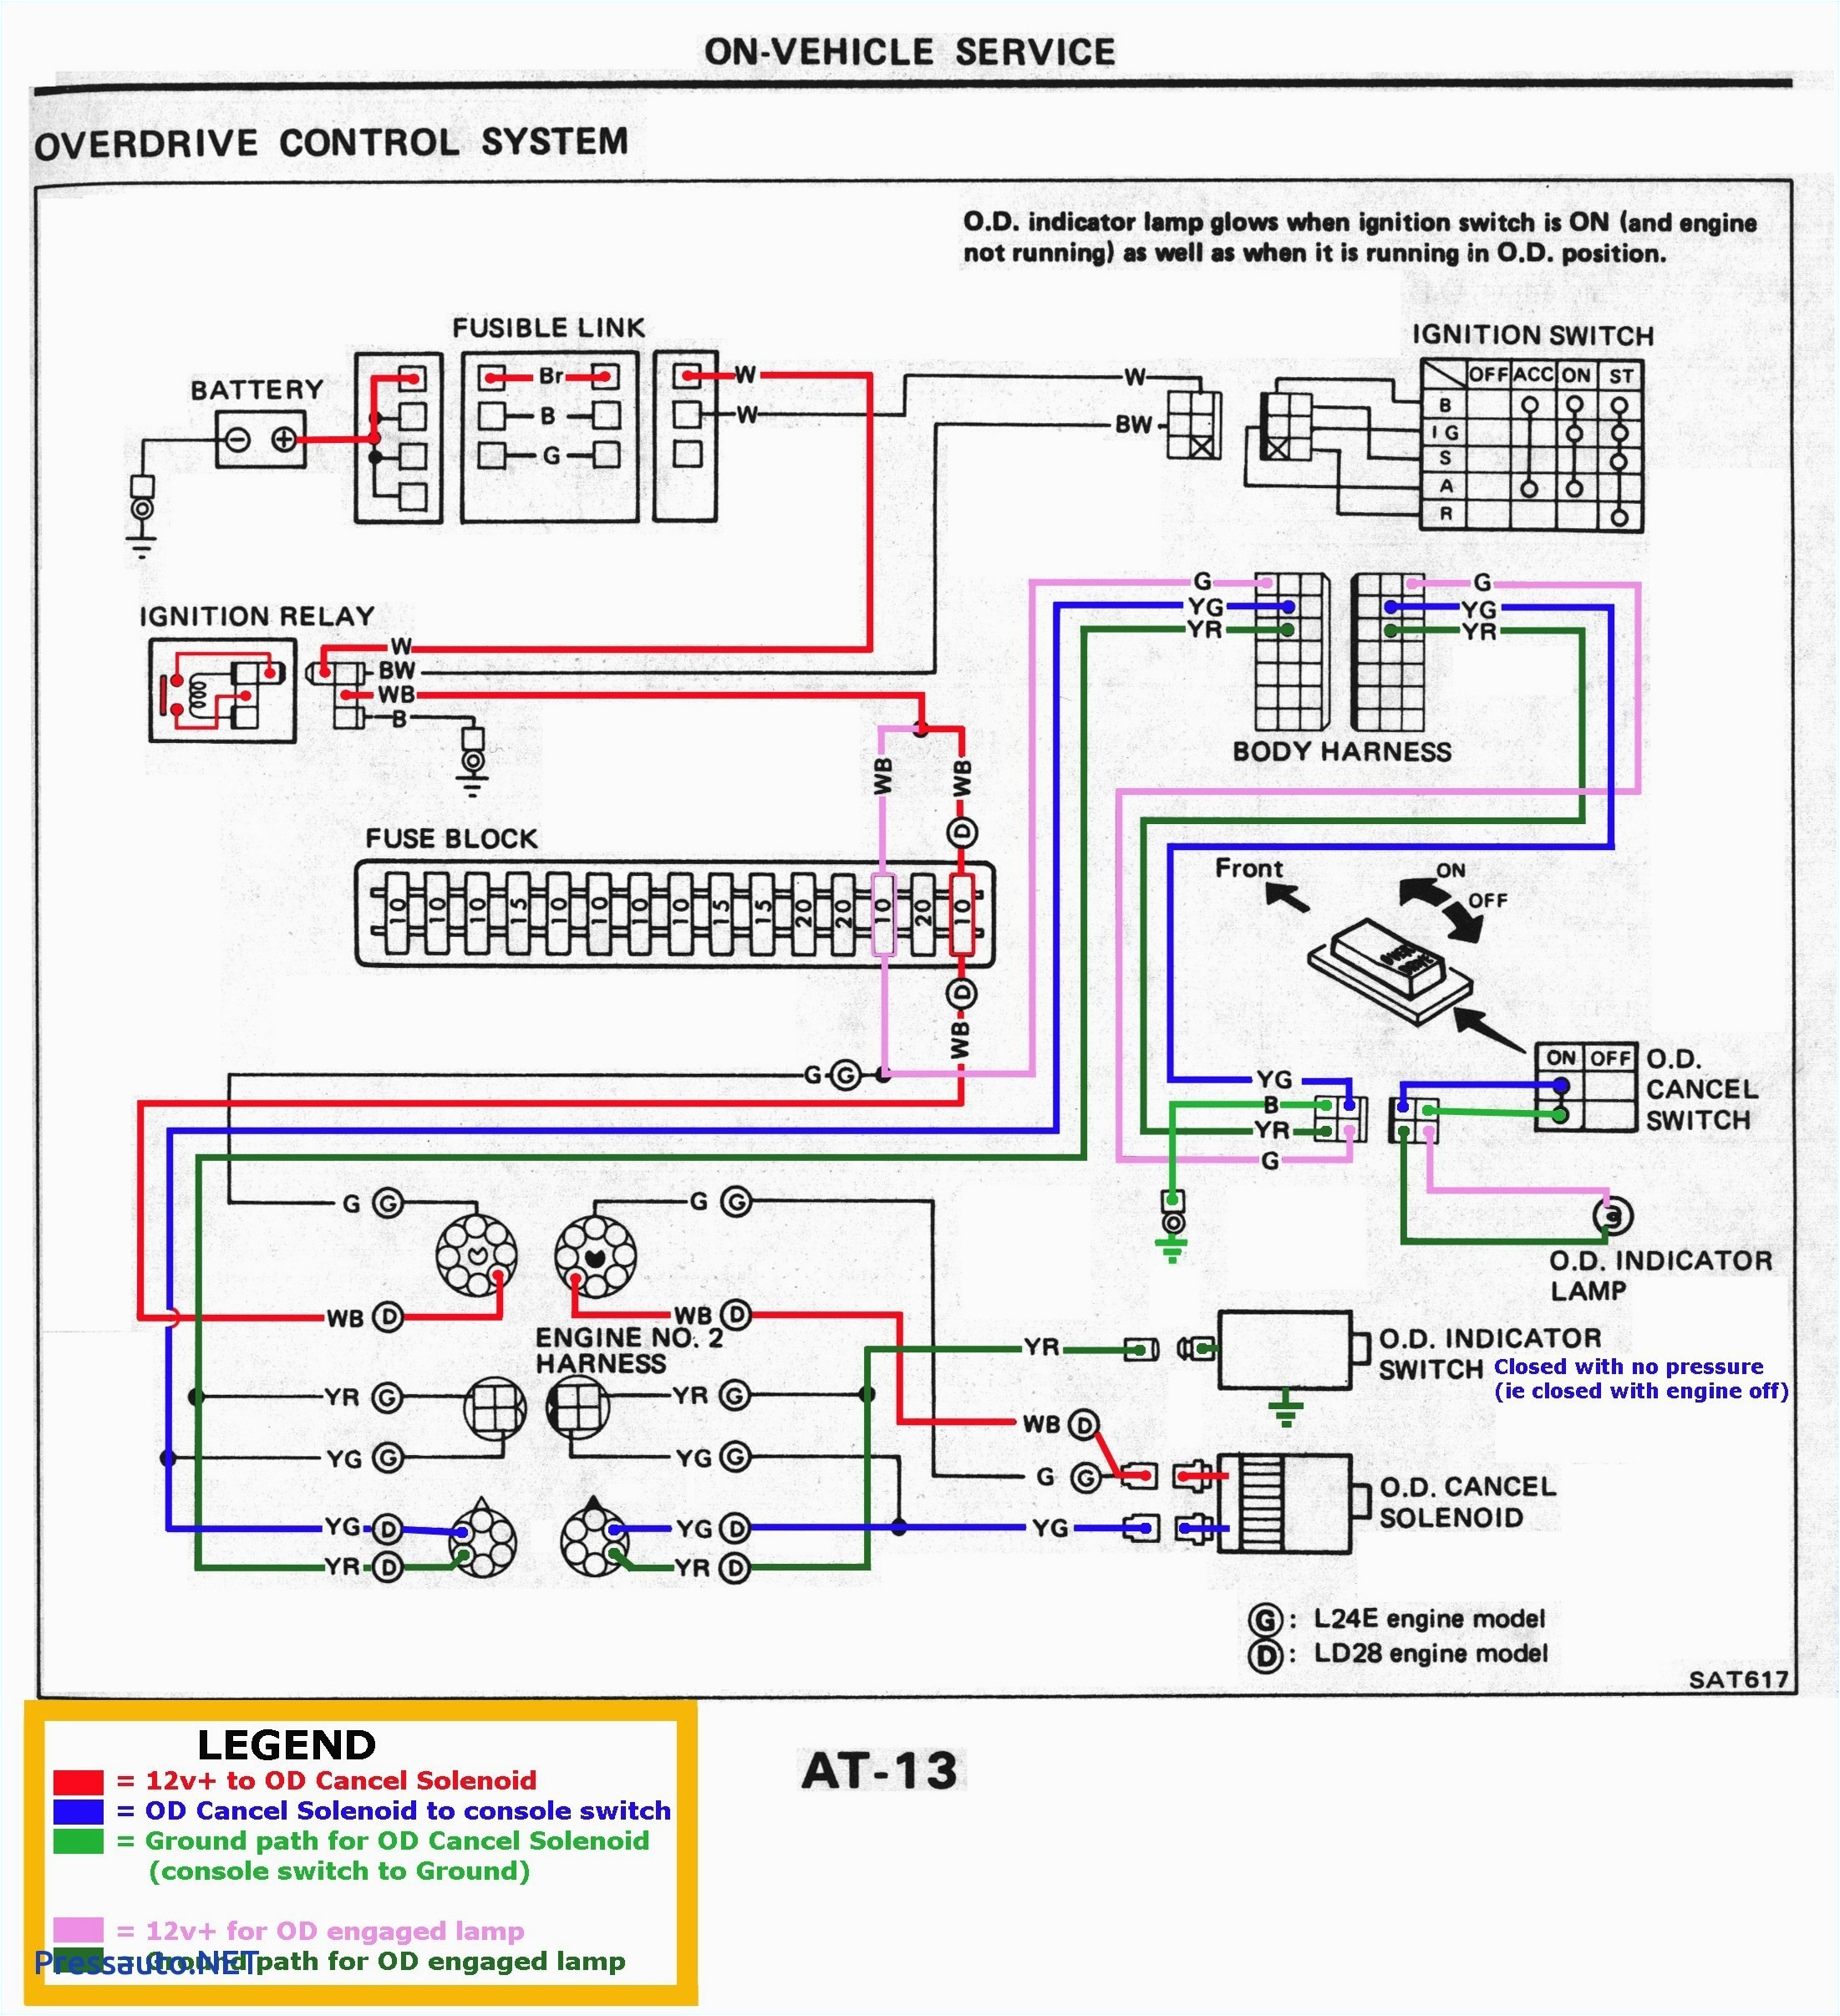 toyota auris wiring diagram fresh toyota auris wiring diagram archives joescablecar jpg